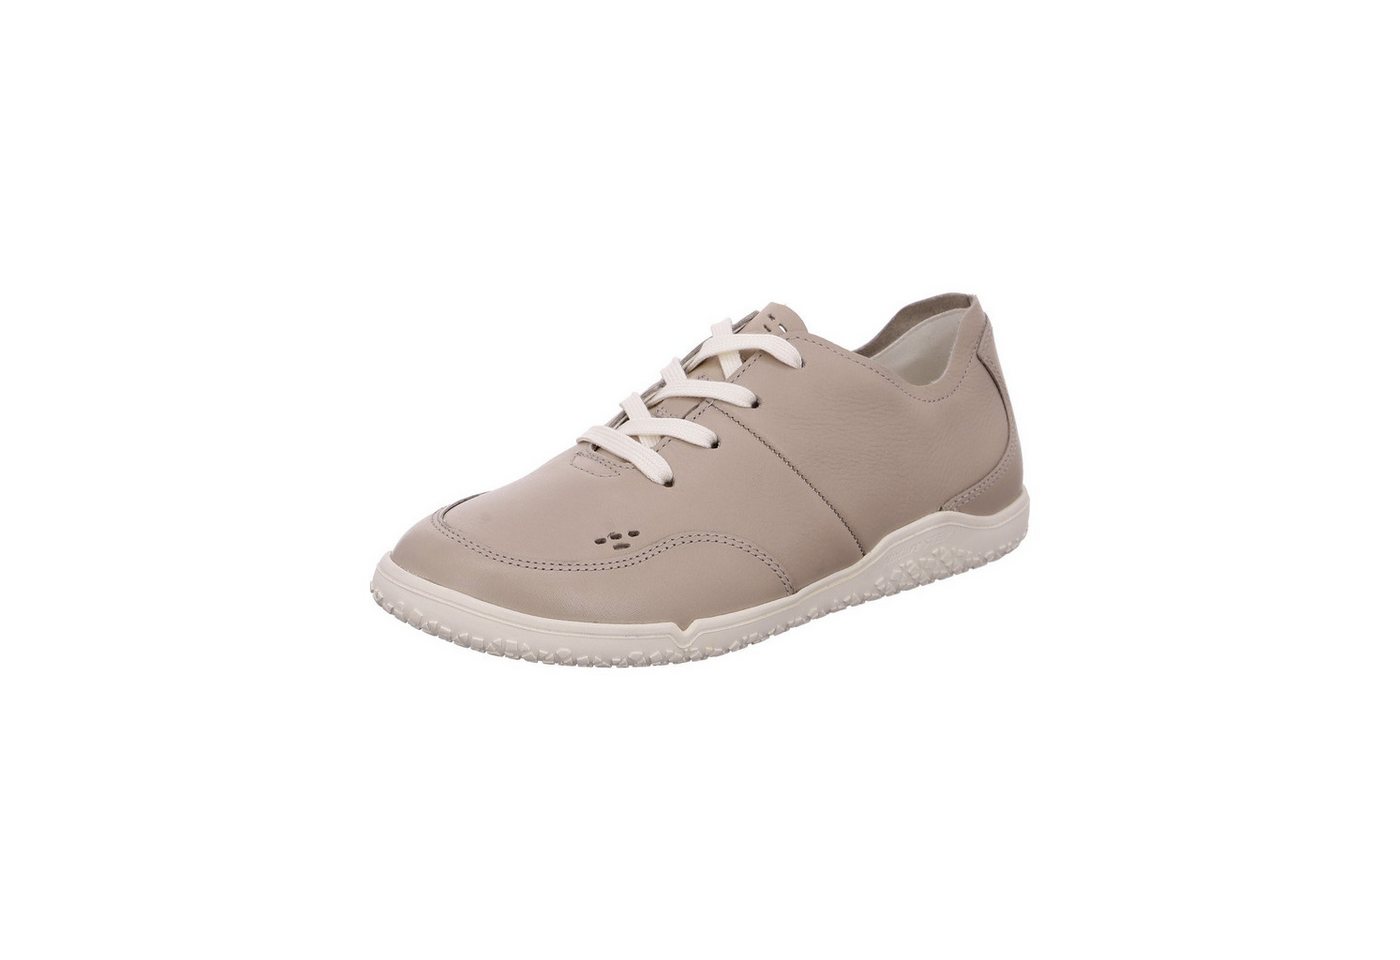 Ara Nature - Damen Schuhe Schnürschuh Sneaker Glattleder grau von Ara